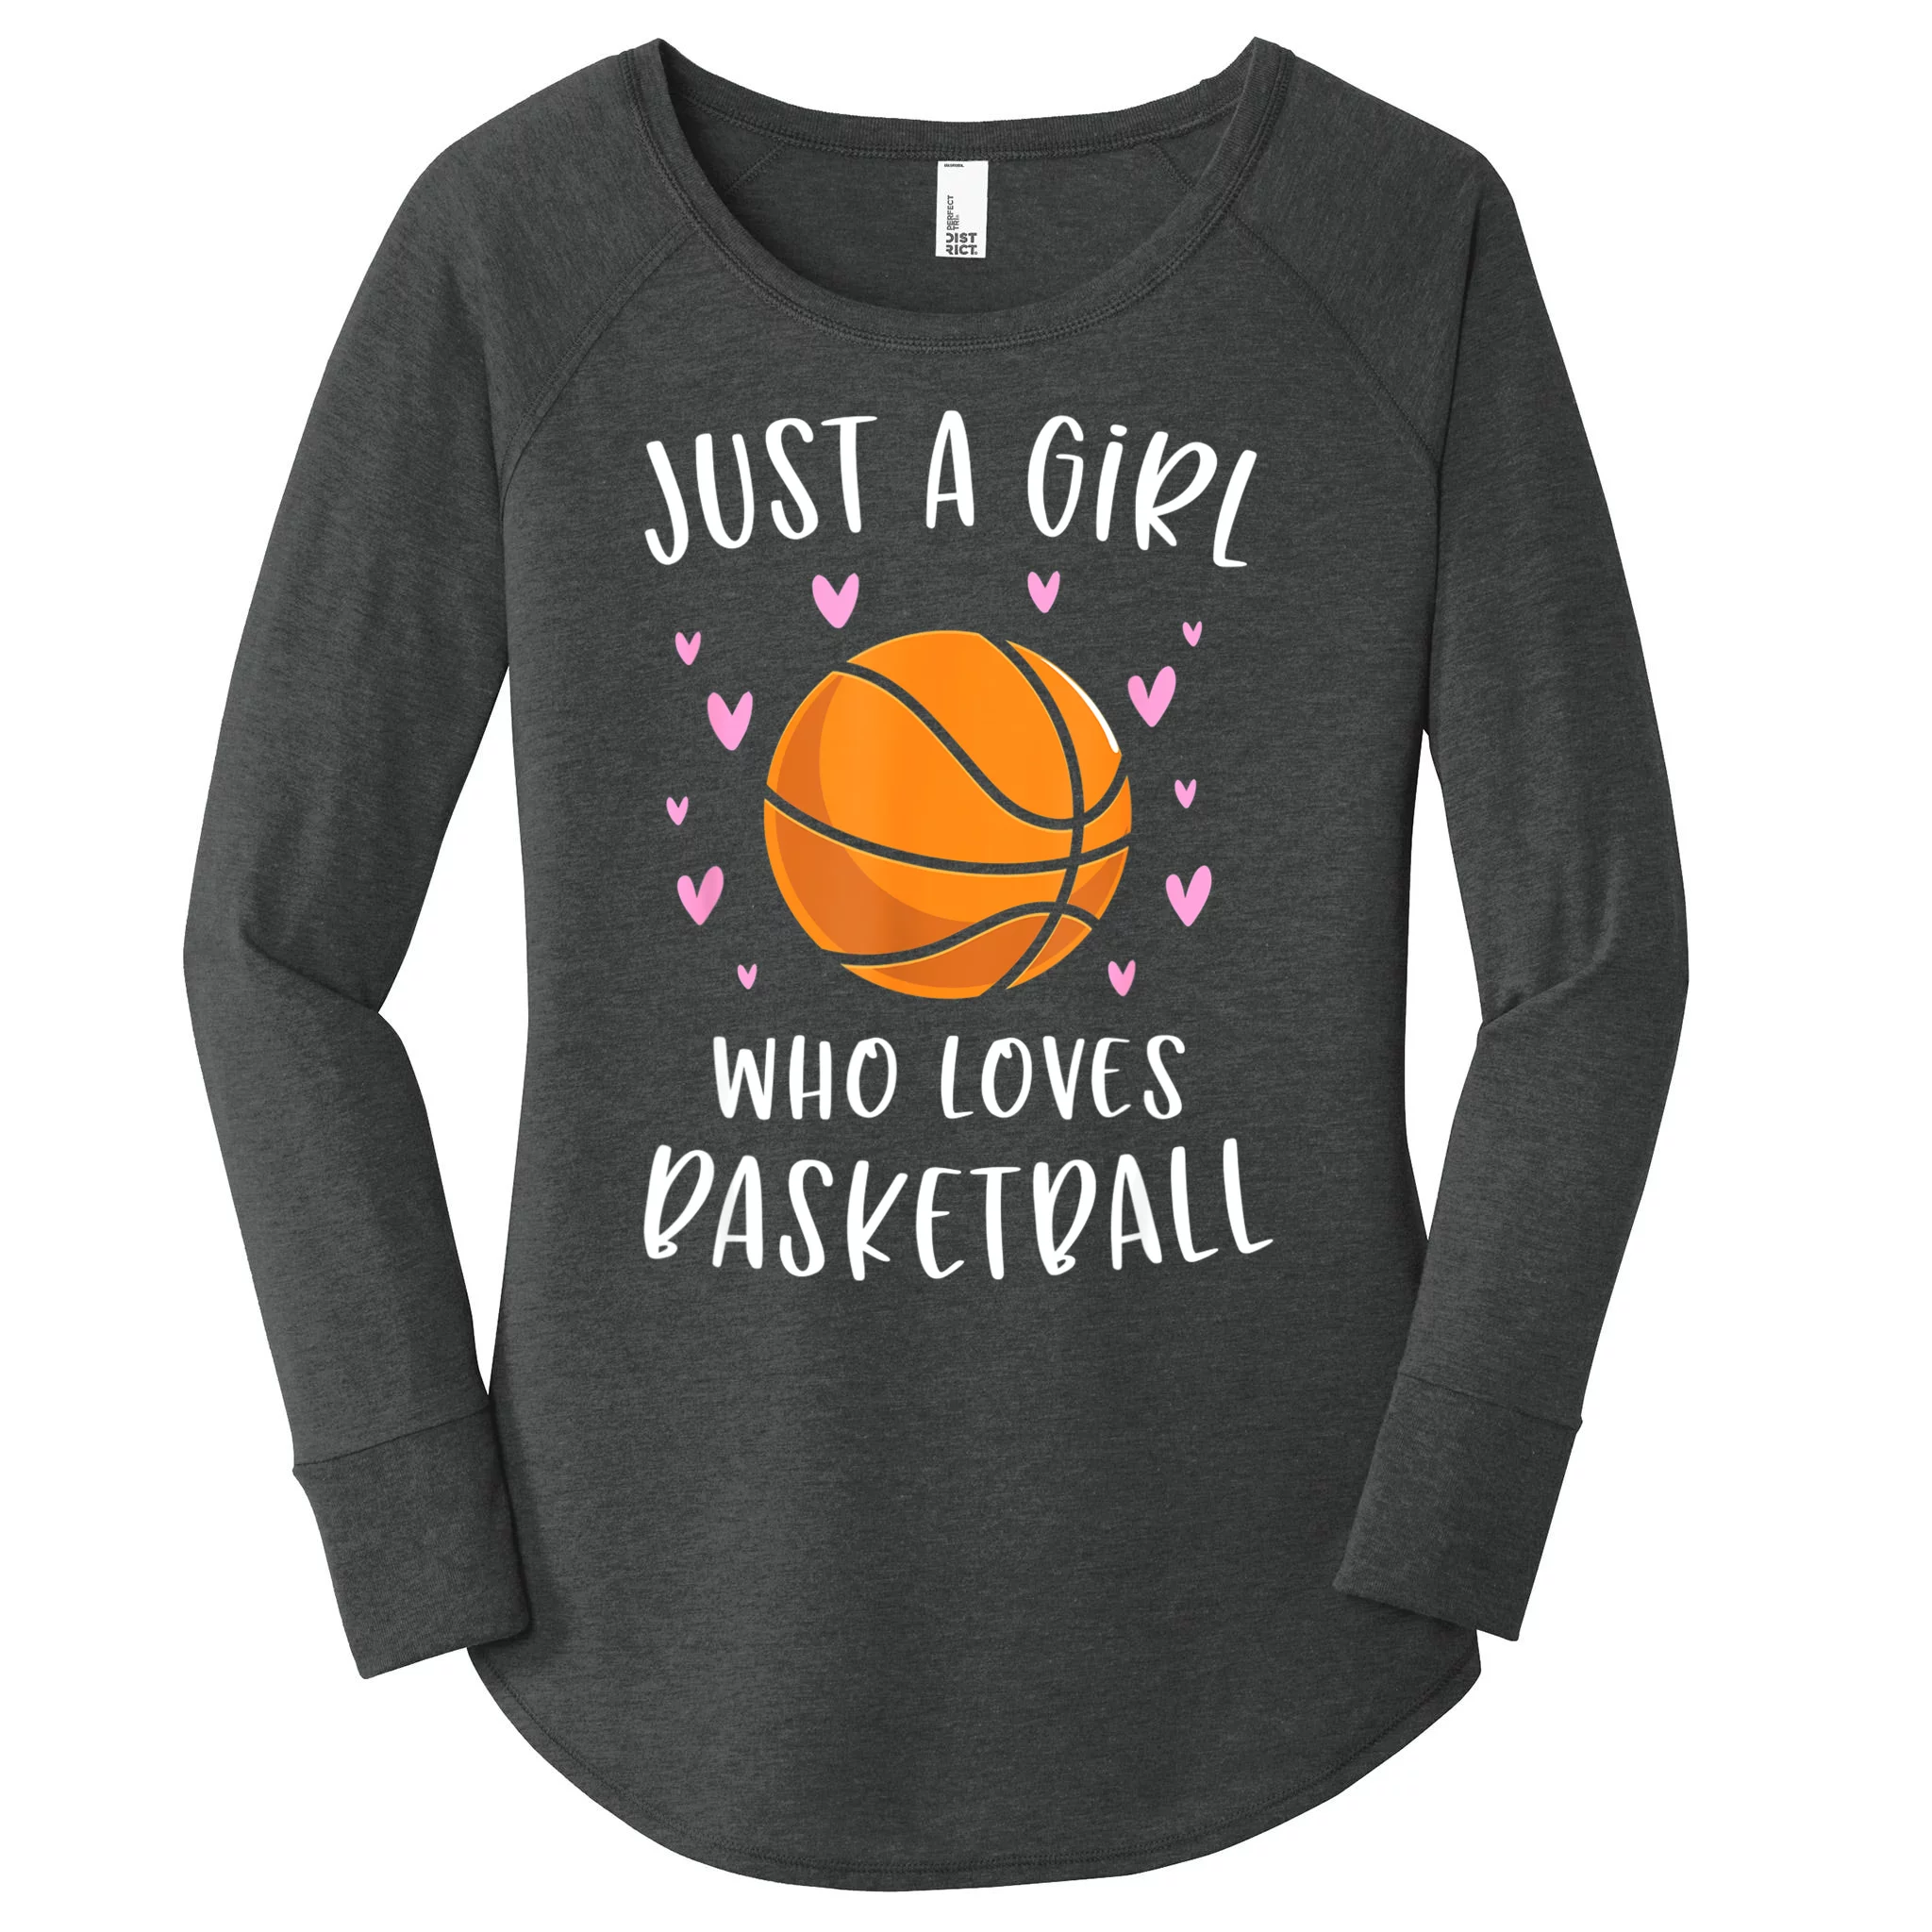 Sleeveless Basketball Jersey Uniforms Custom Sublimation Basketball Shirt  And Shorts Gold Black - Basketball Jerseys - AliExpress